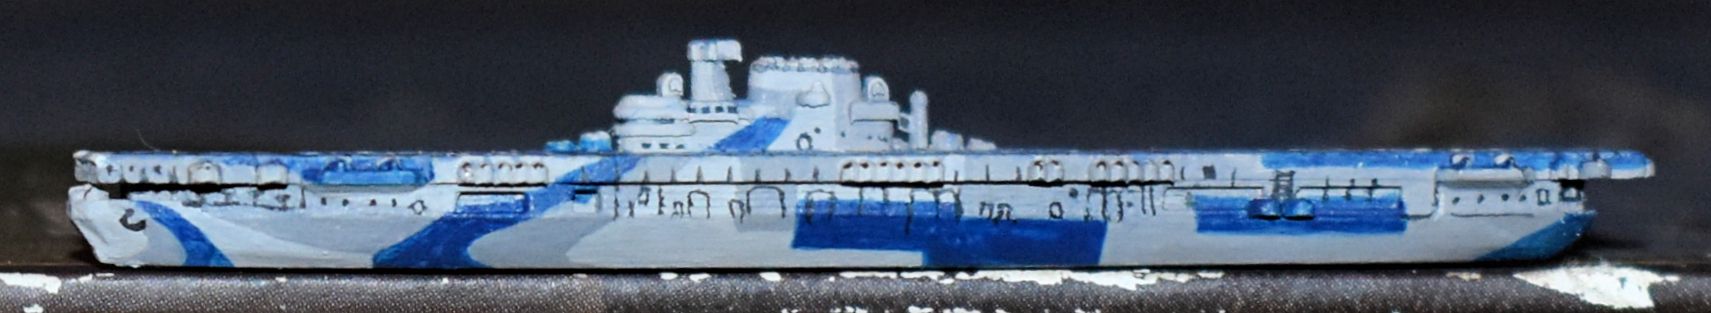 DSC_0047-USS Enterprise (CV-6).jpg